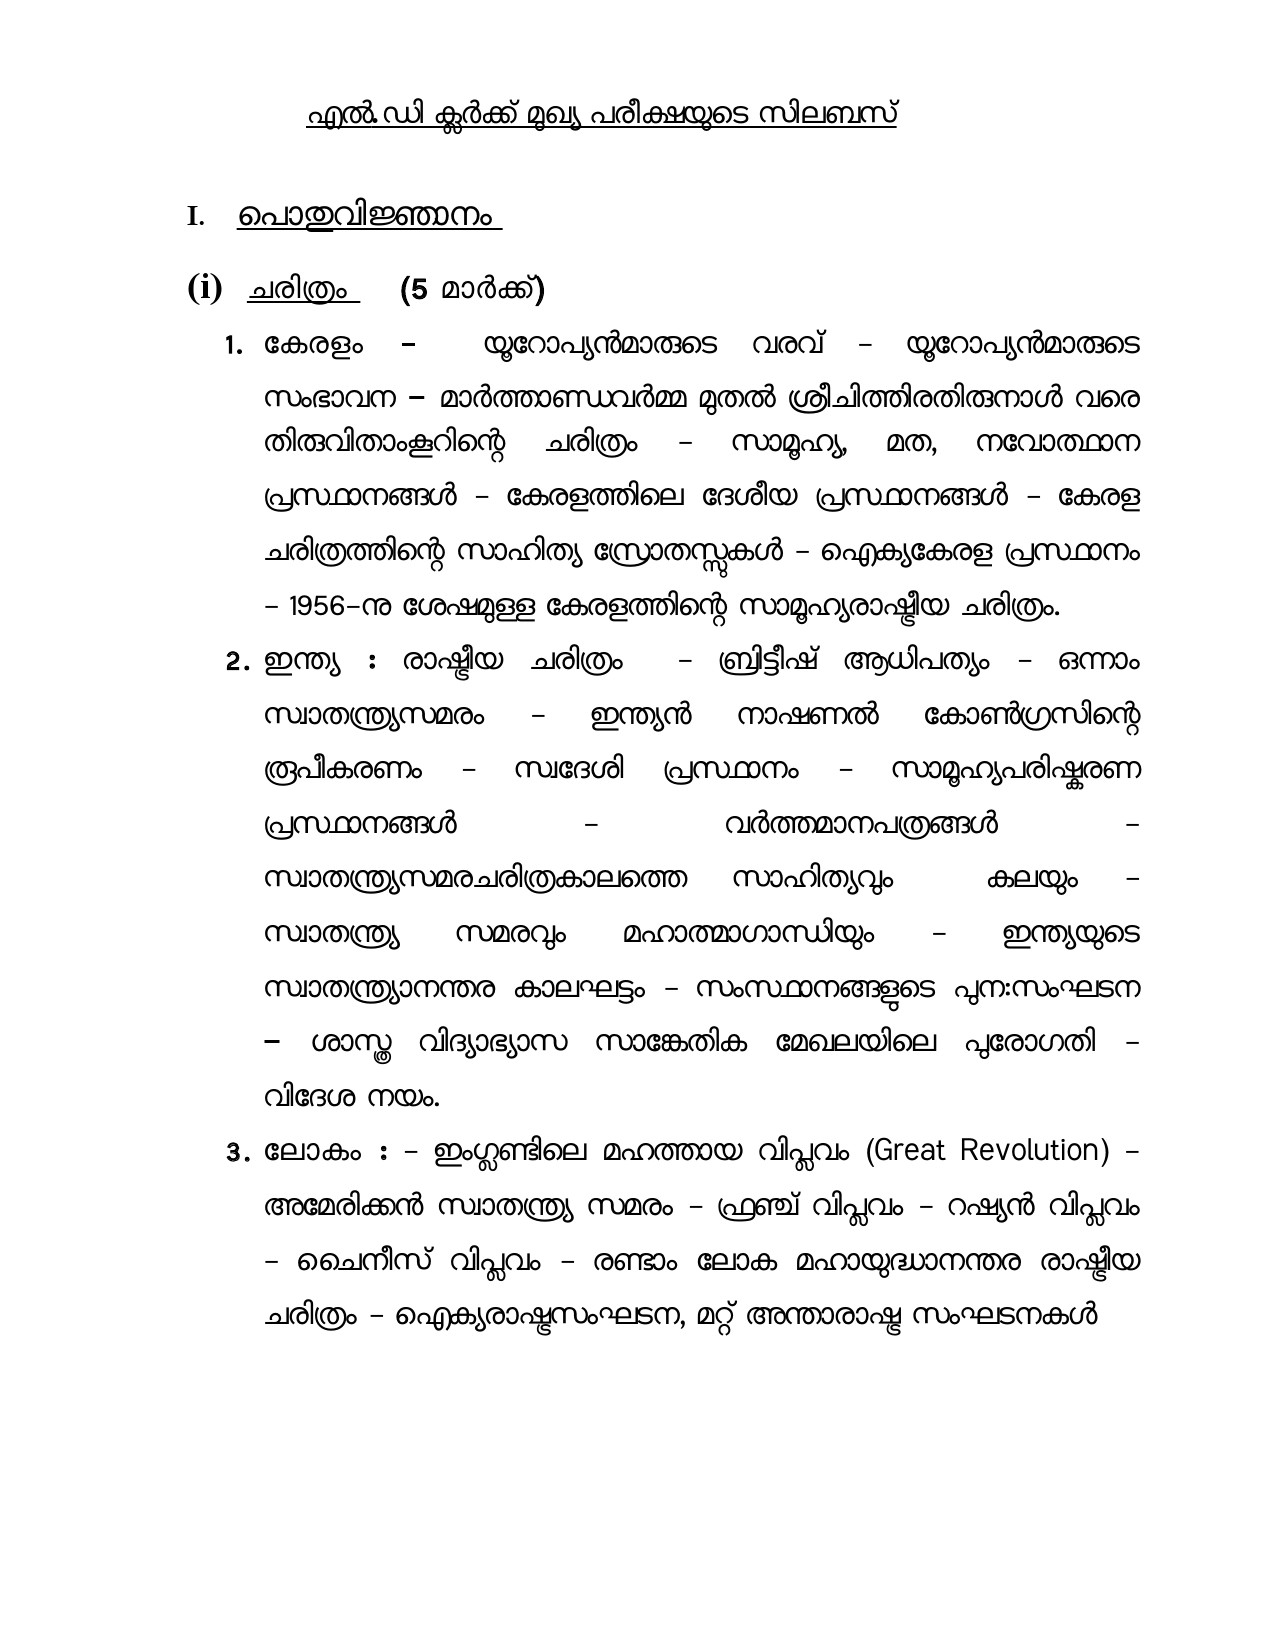 LDC Main Exam Syllabus Malayalam And English - Notification Image 2